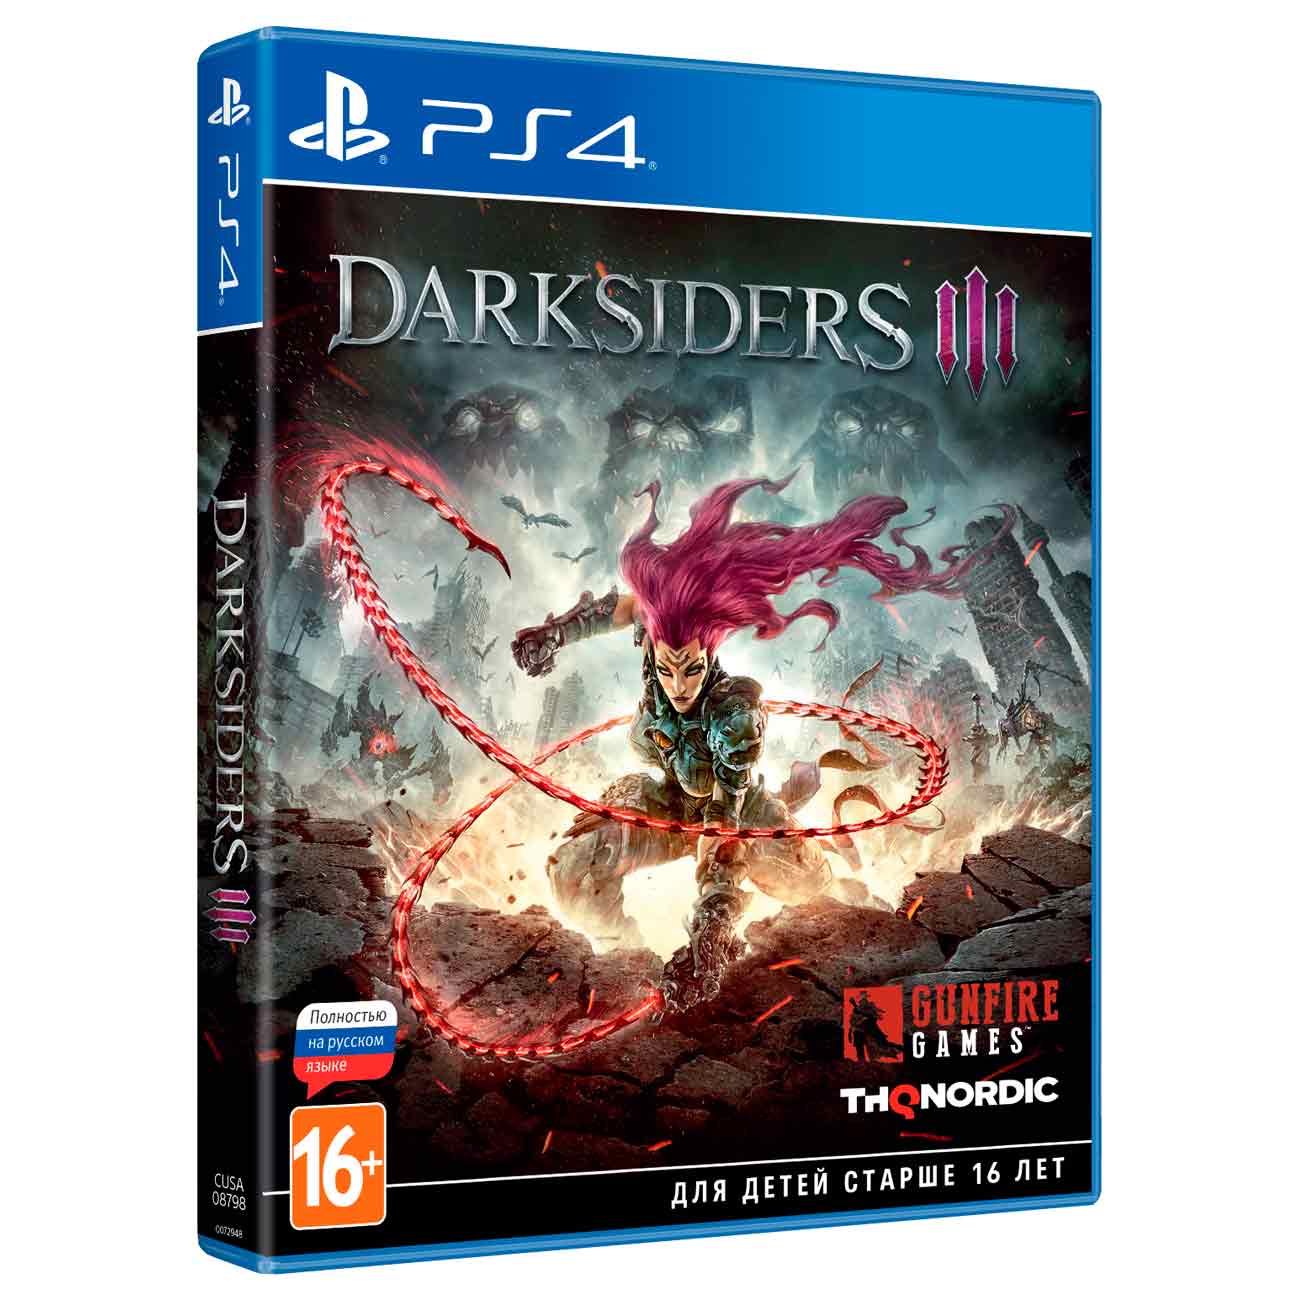 Darksiders ps4. Диск Xbox one Darksiders 3. Darksiders ps3 диск. Darksiders 3 [ps4]. Дарксайдерс 3 на пс3.